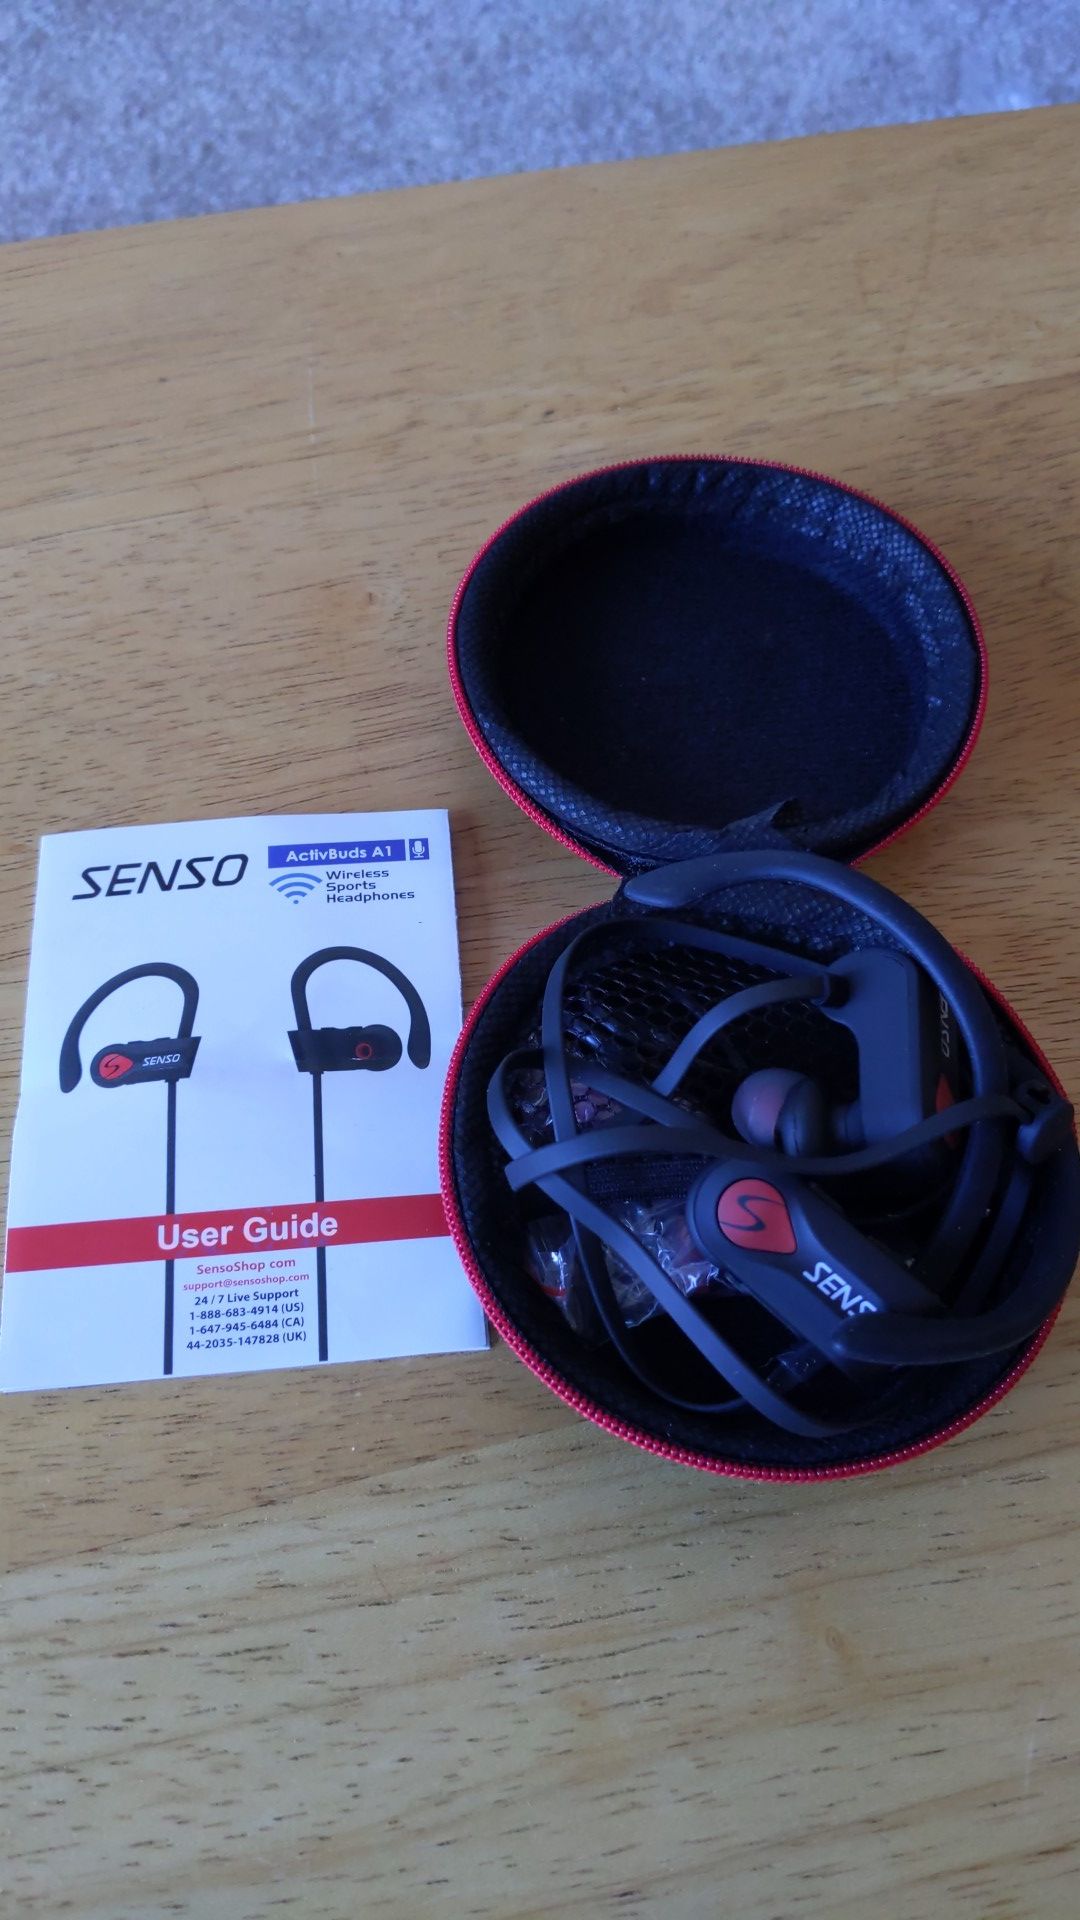 Senso A1 Bluetooth earbuds